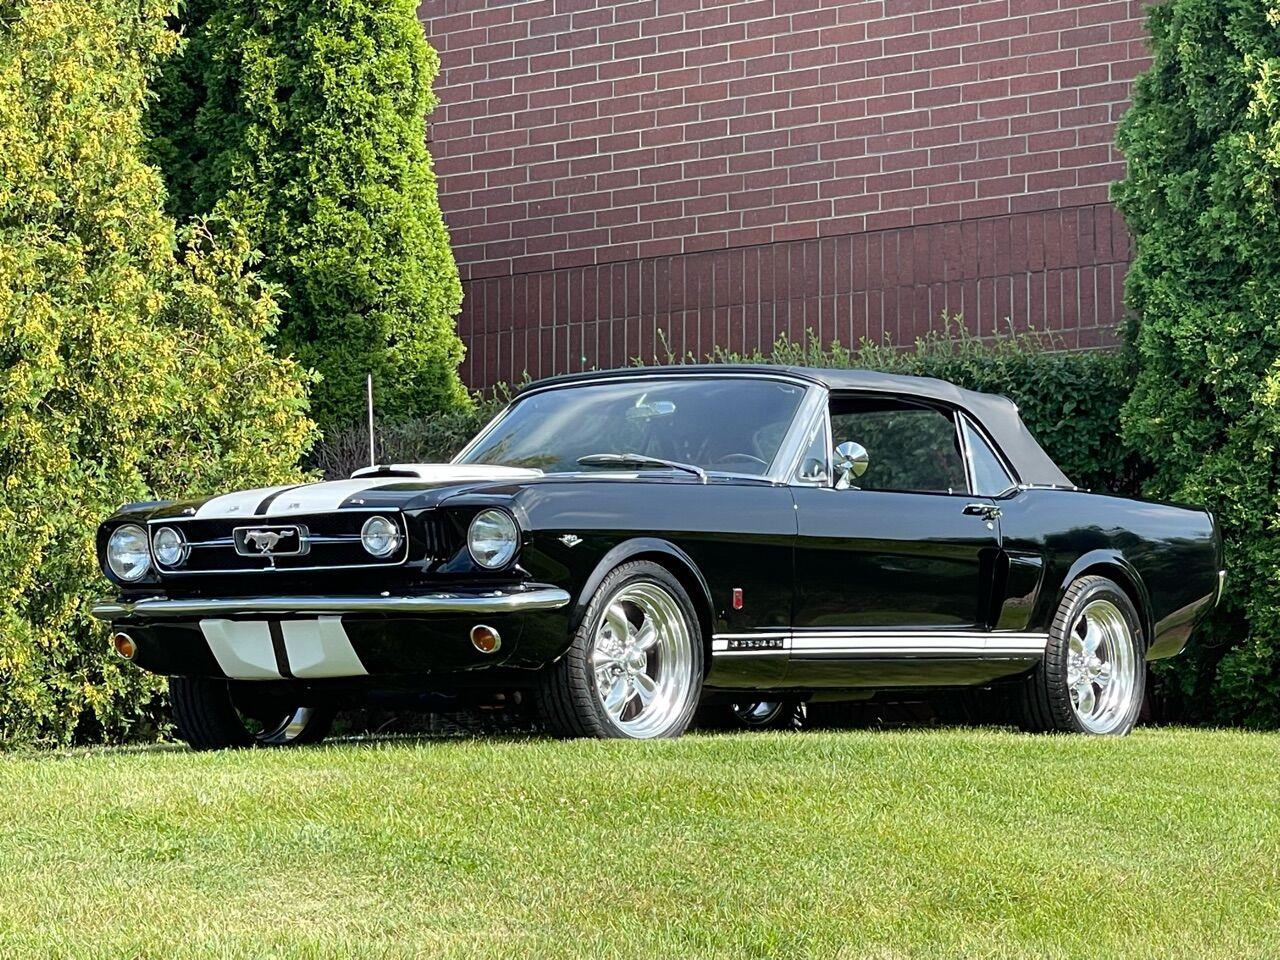 For Sale: 1965 Ford Mustang in Geneva, Illinois for sale in Geneva, IL